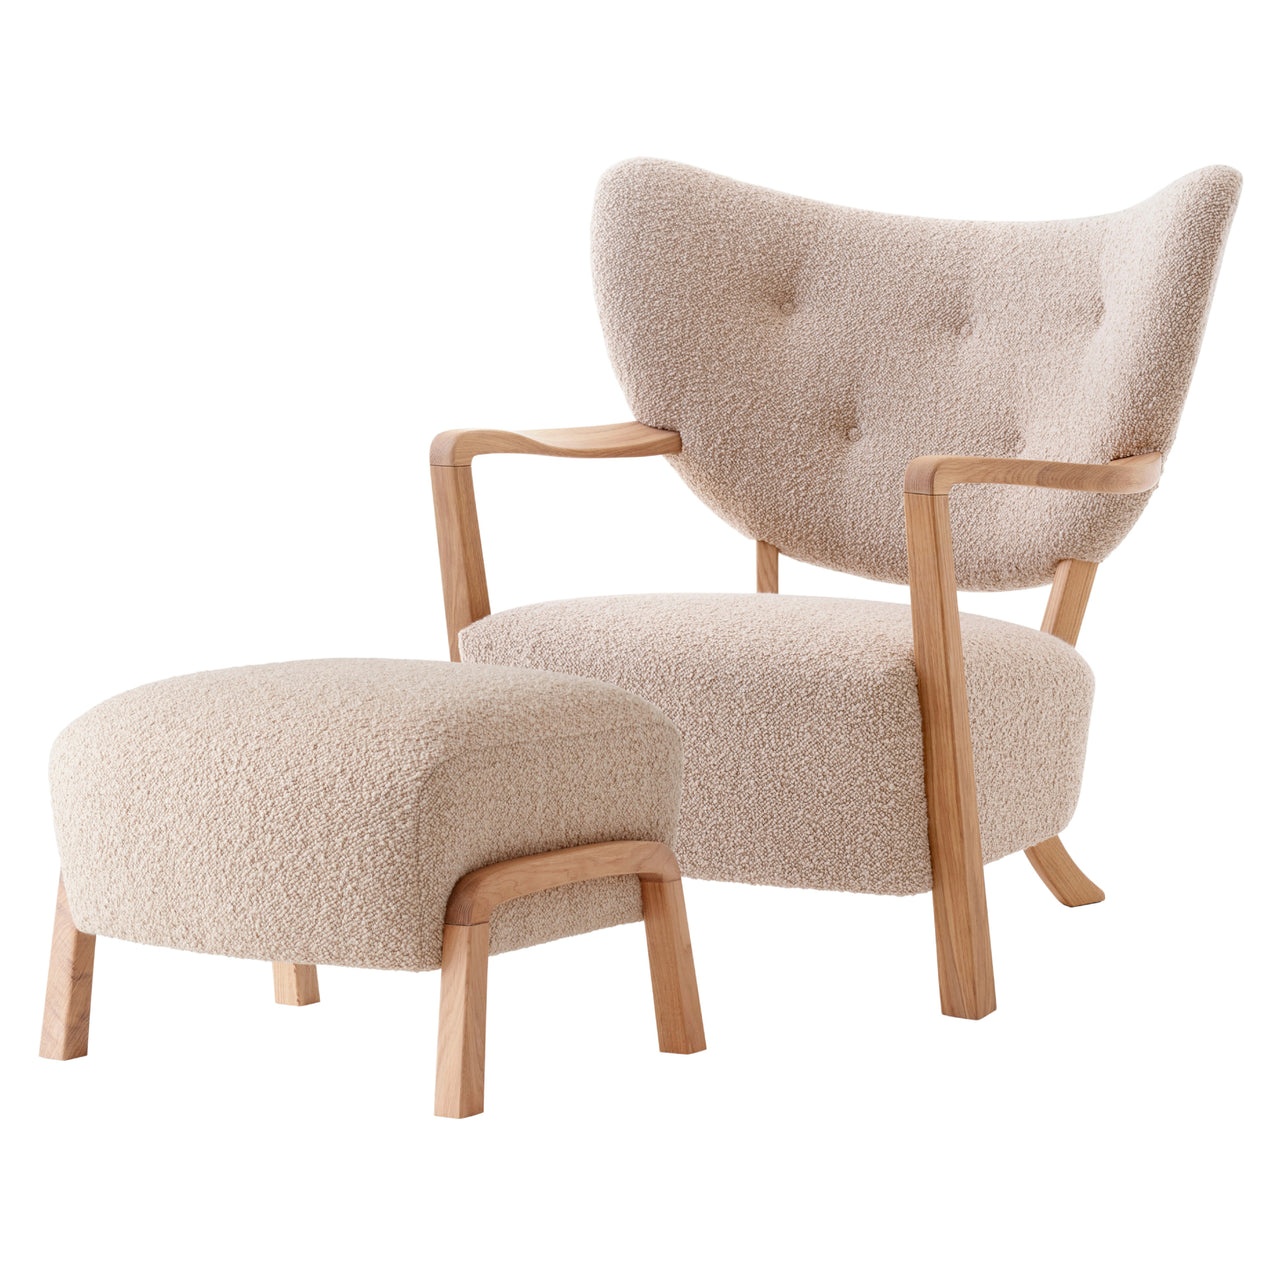 Wulff Lounge Chair ATD2 + Pouf ATD3: Oak + Karakorum 003